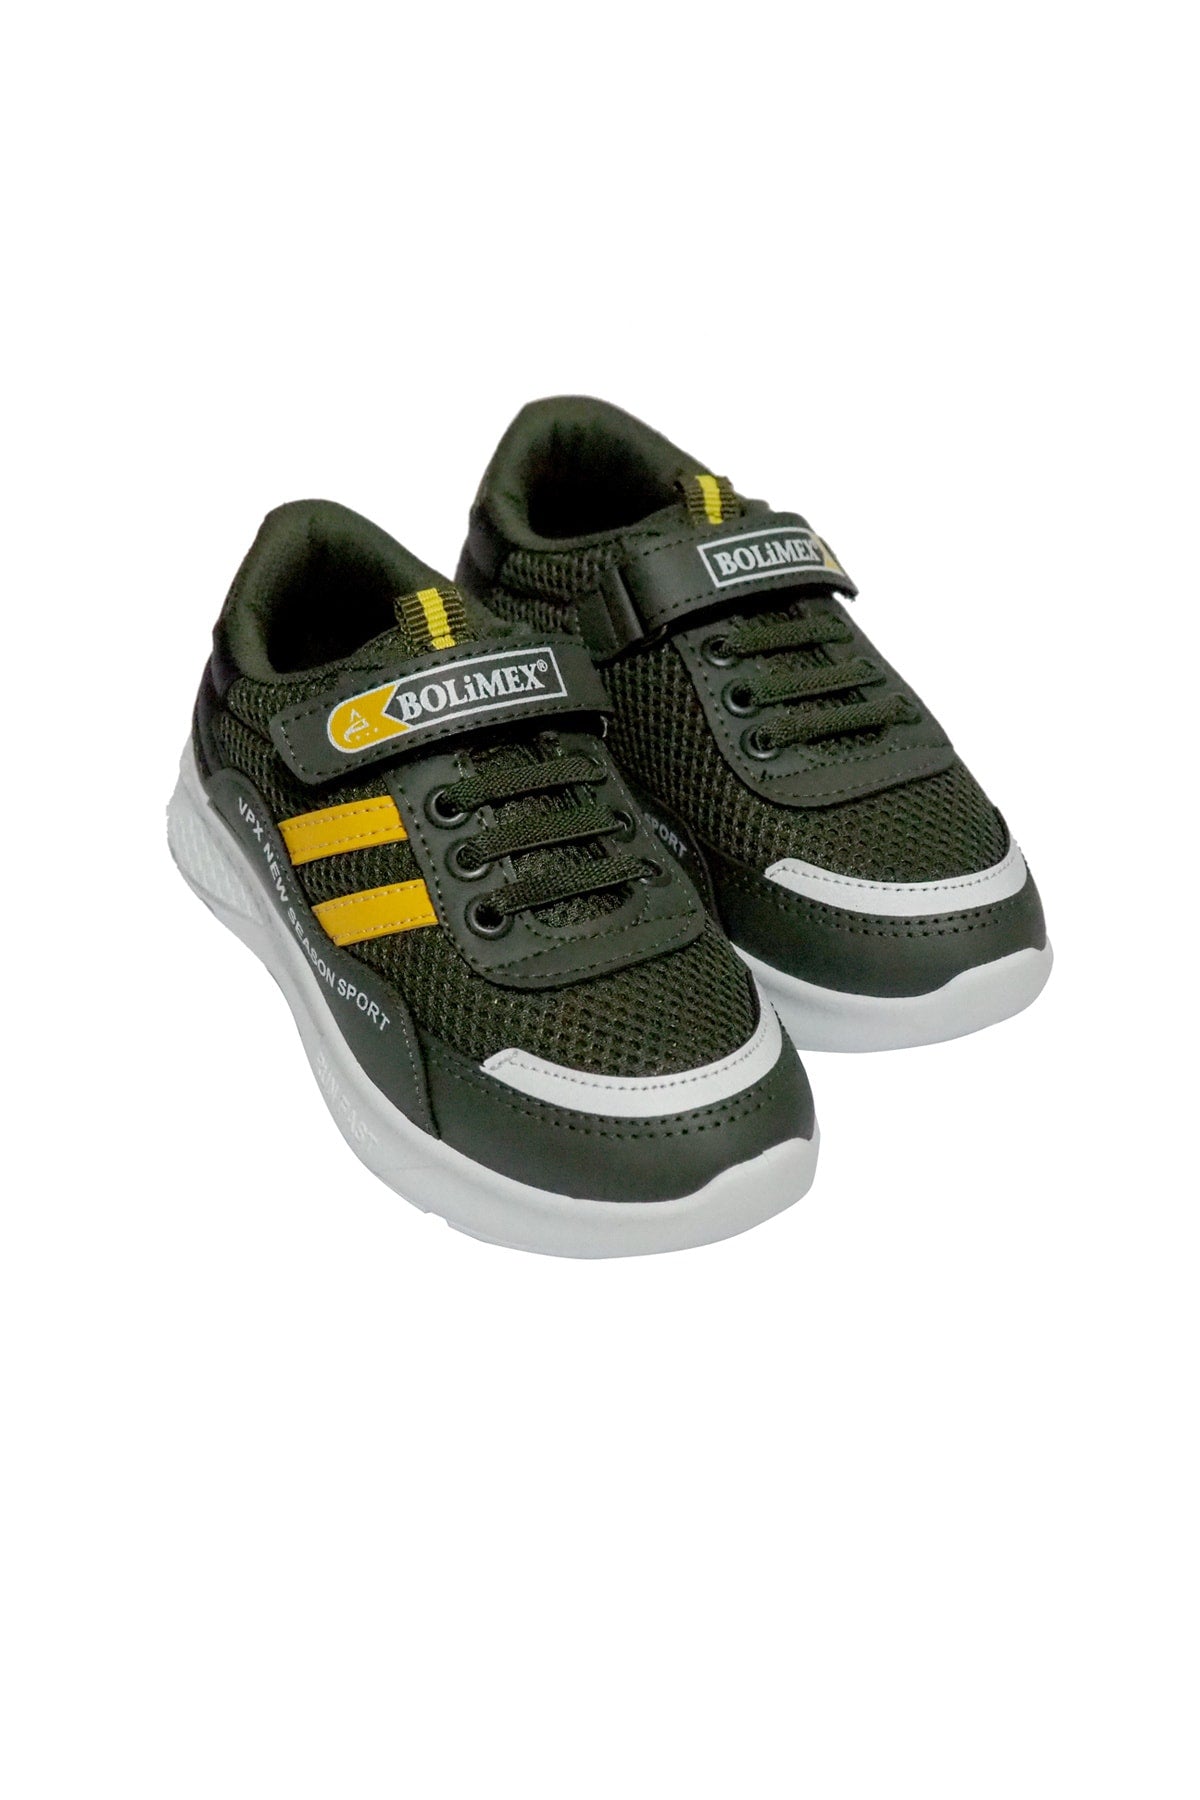 Adlax Boys' Summer Casual Sweatproof Velcro Mesh Mesh Sneakers Sneaker Blm000